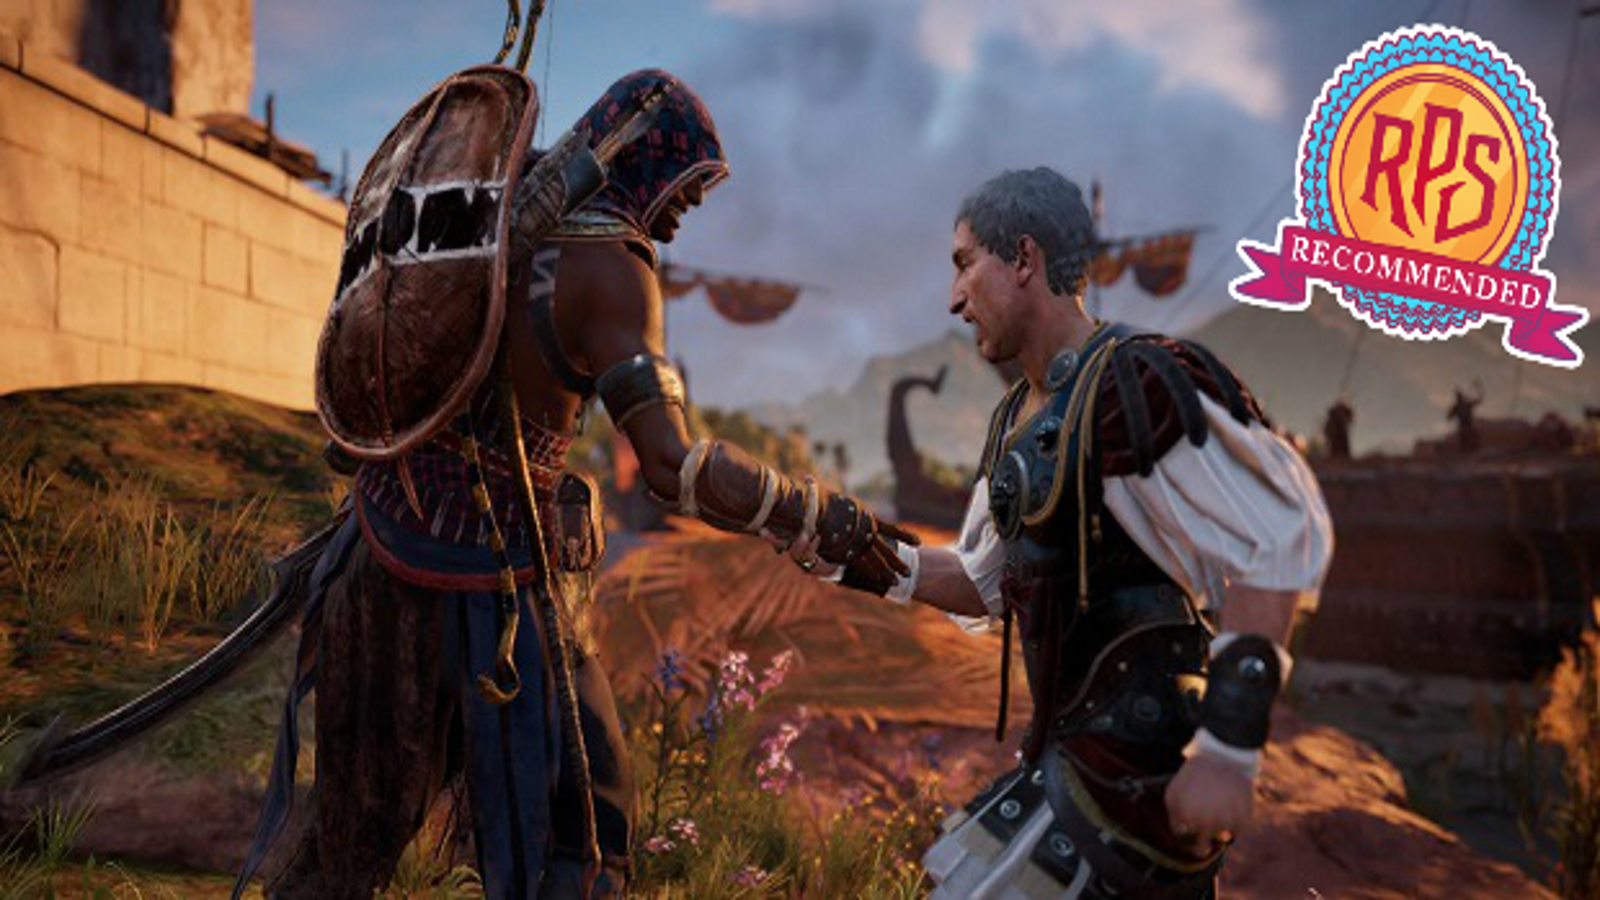 ASSASSIN'S CREED ORIGINS Xbox One Gameplay Walkthrough Part 1 How To Beat  AC Origins 